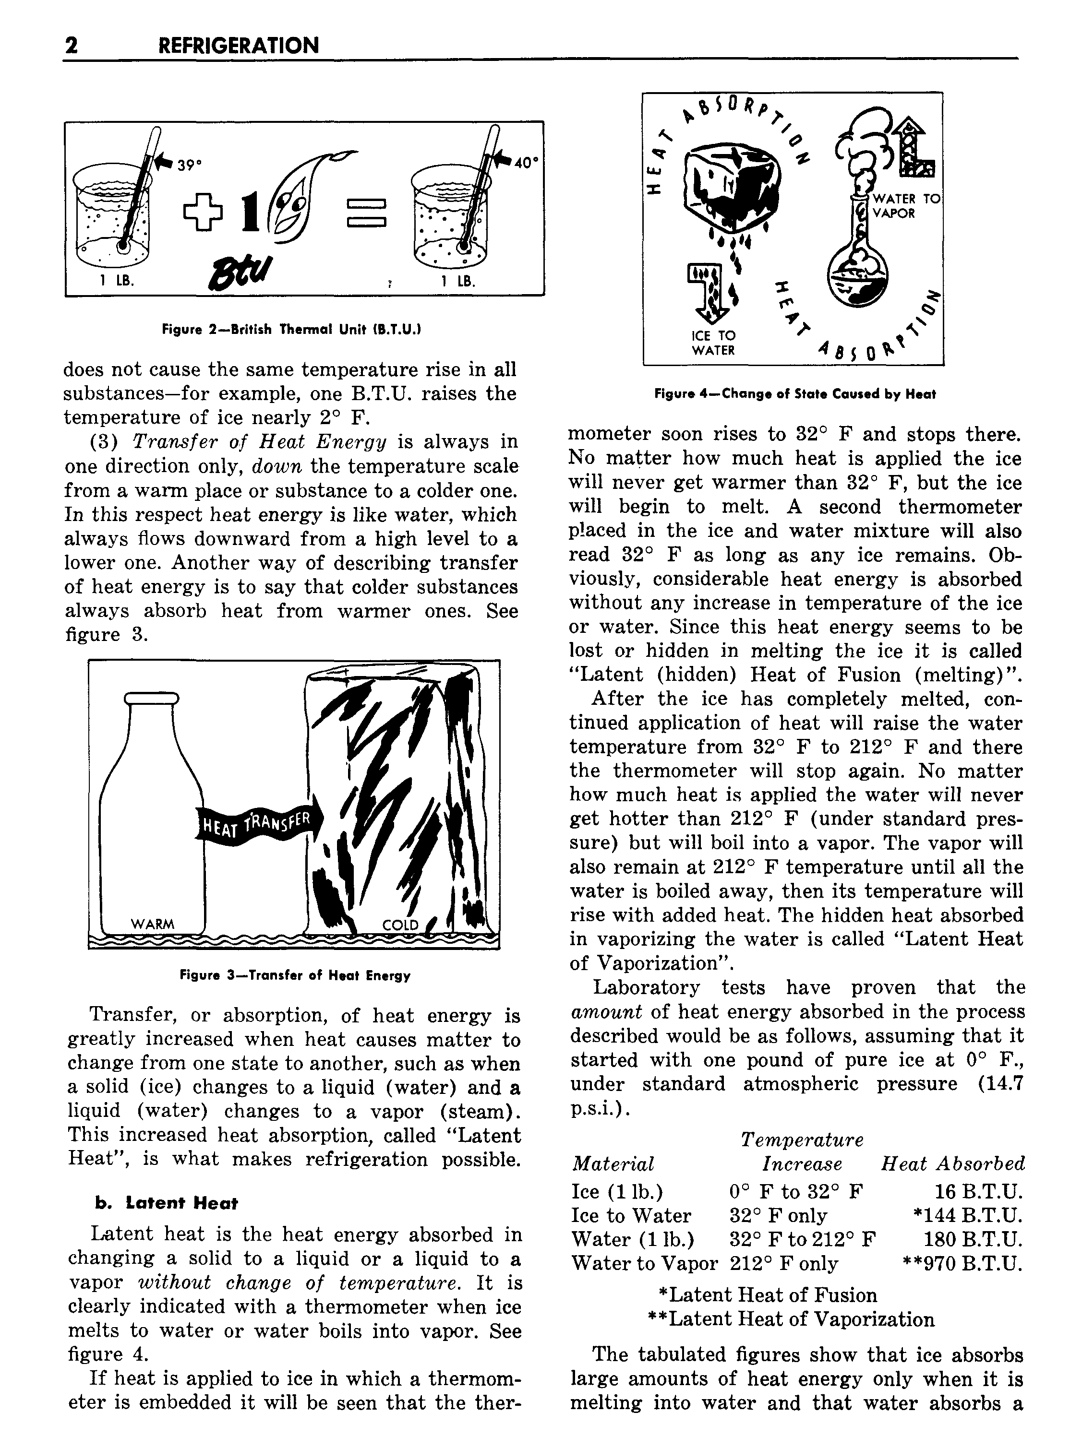 n_16 1954 Buick Shop Manual - Air Conditioner-004-004.jpg